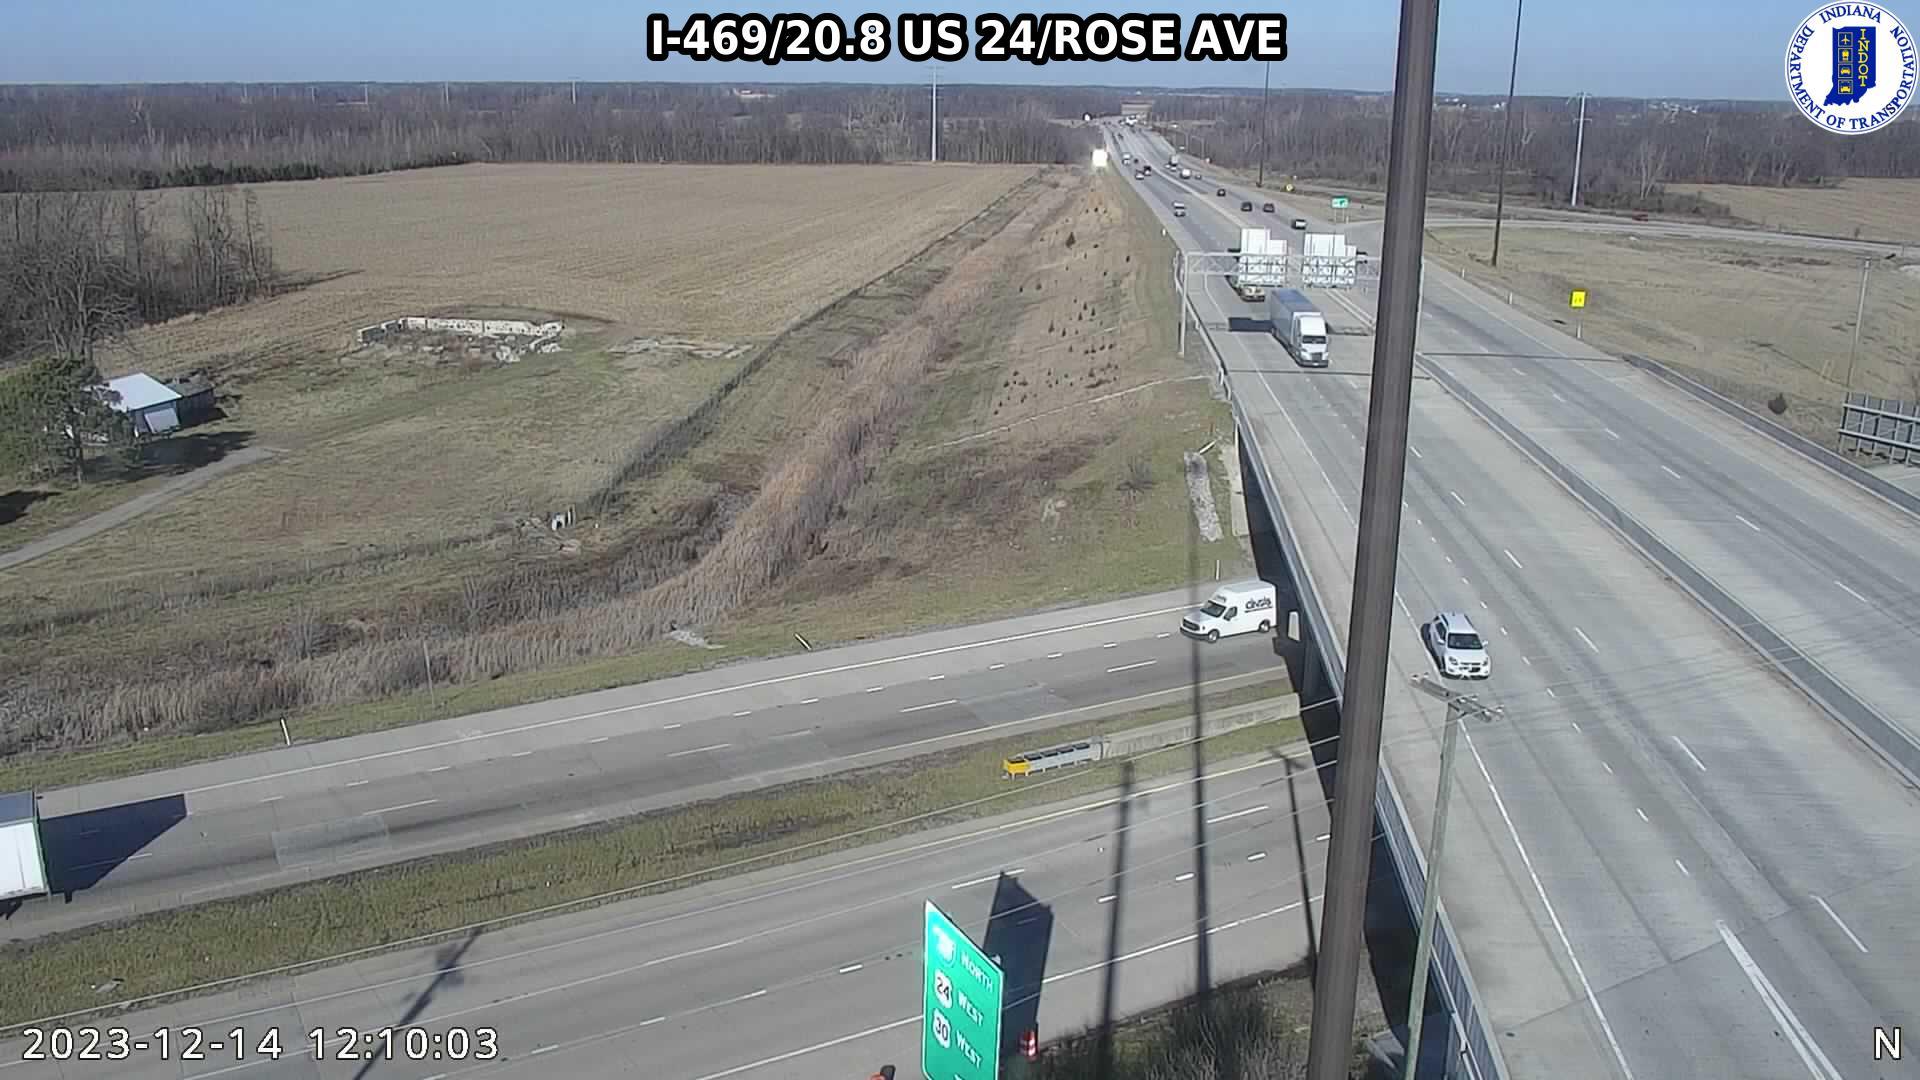 Tanglewood: I-469: I-469/20.8 US 24/ROSE AVE Traffic Camera